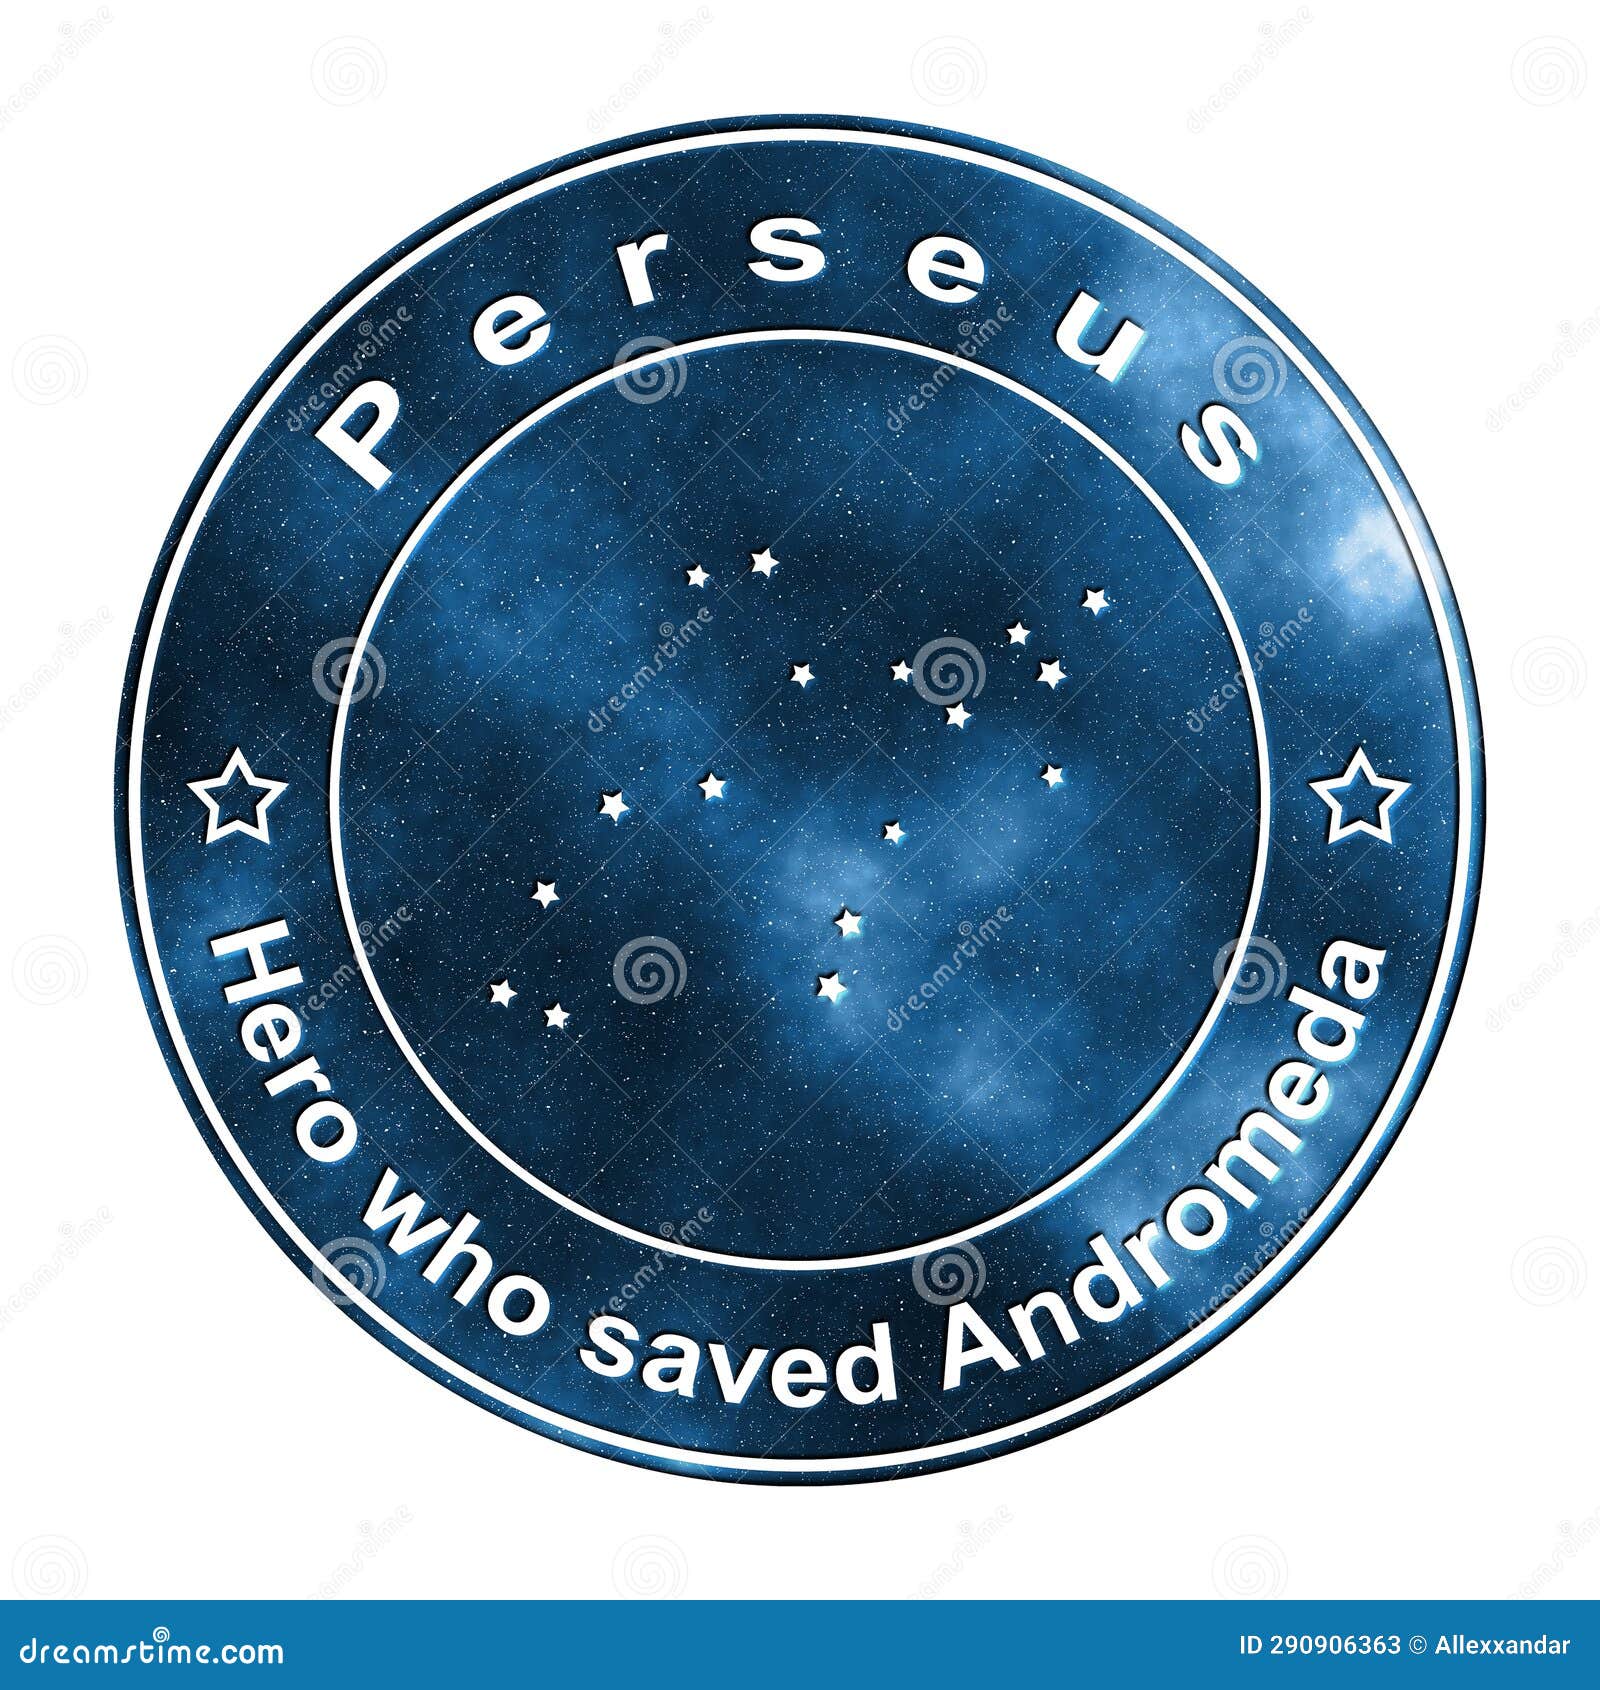 perseus star constellation, hero constellation